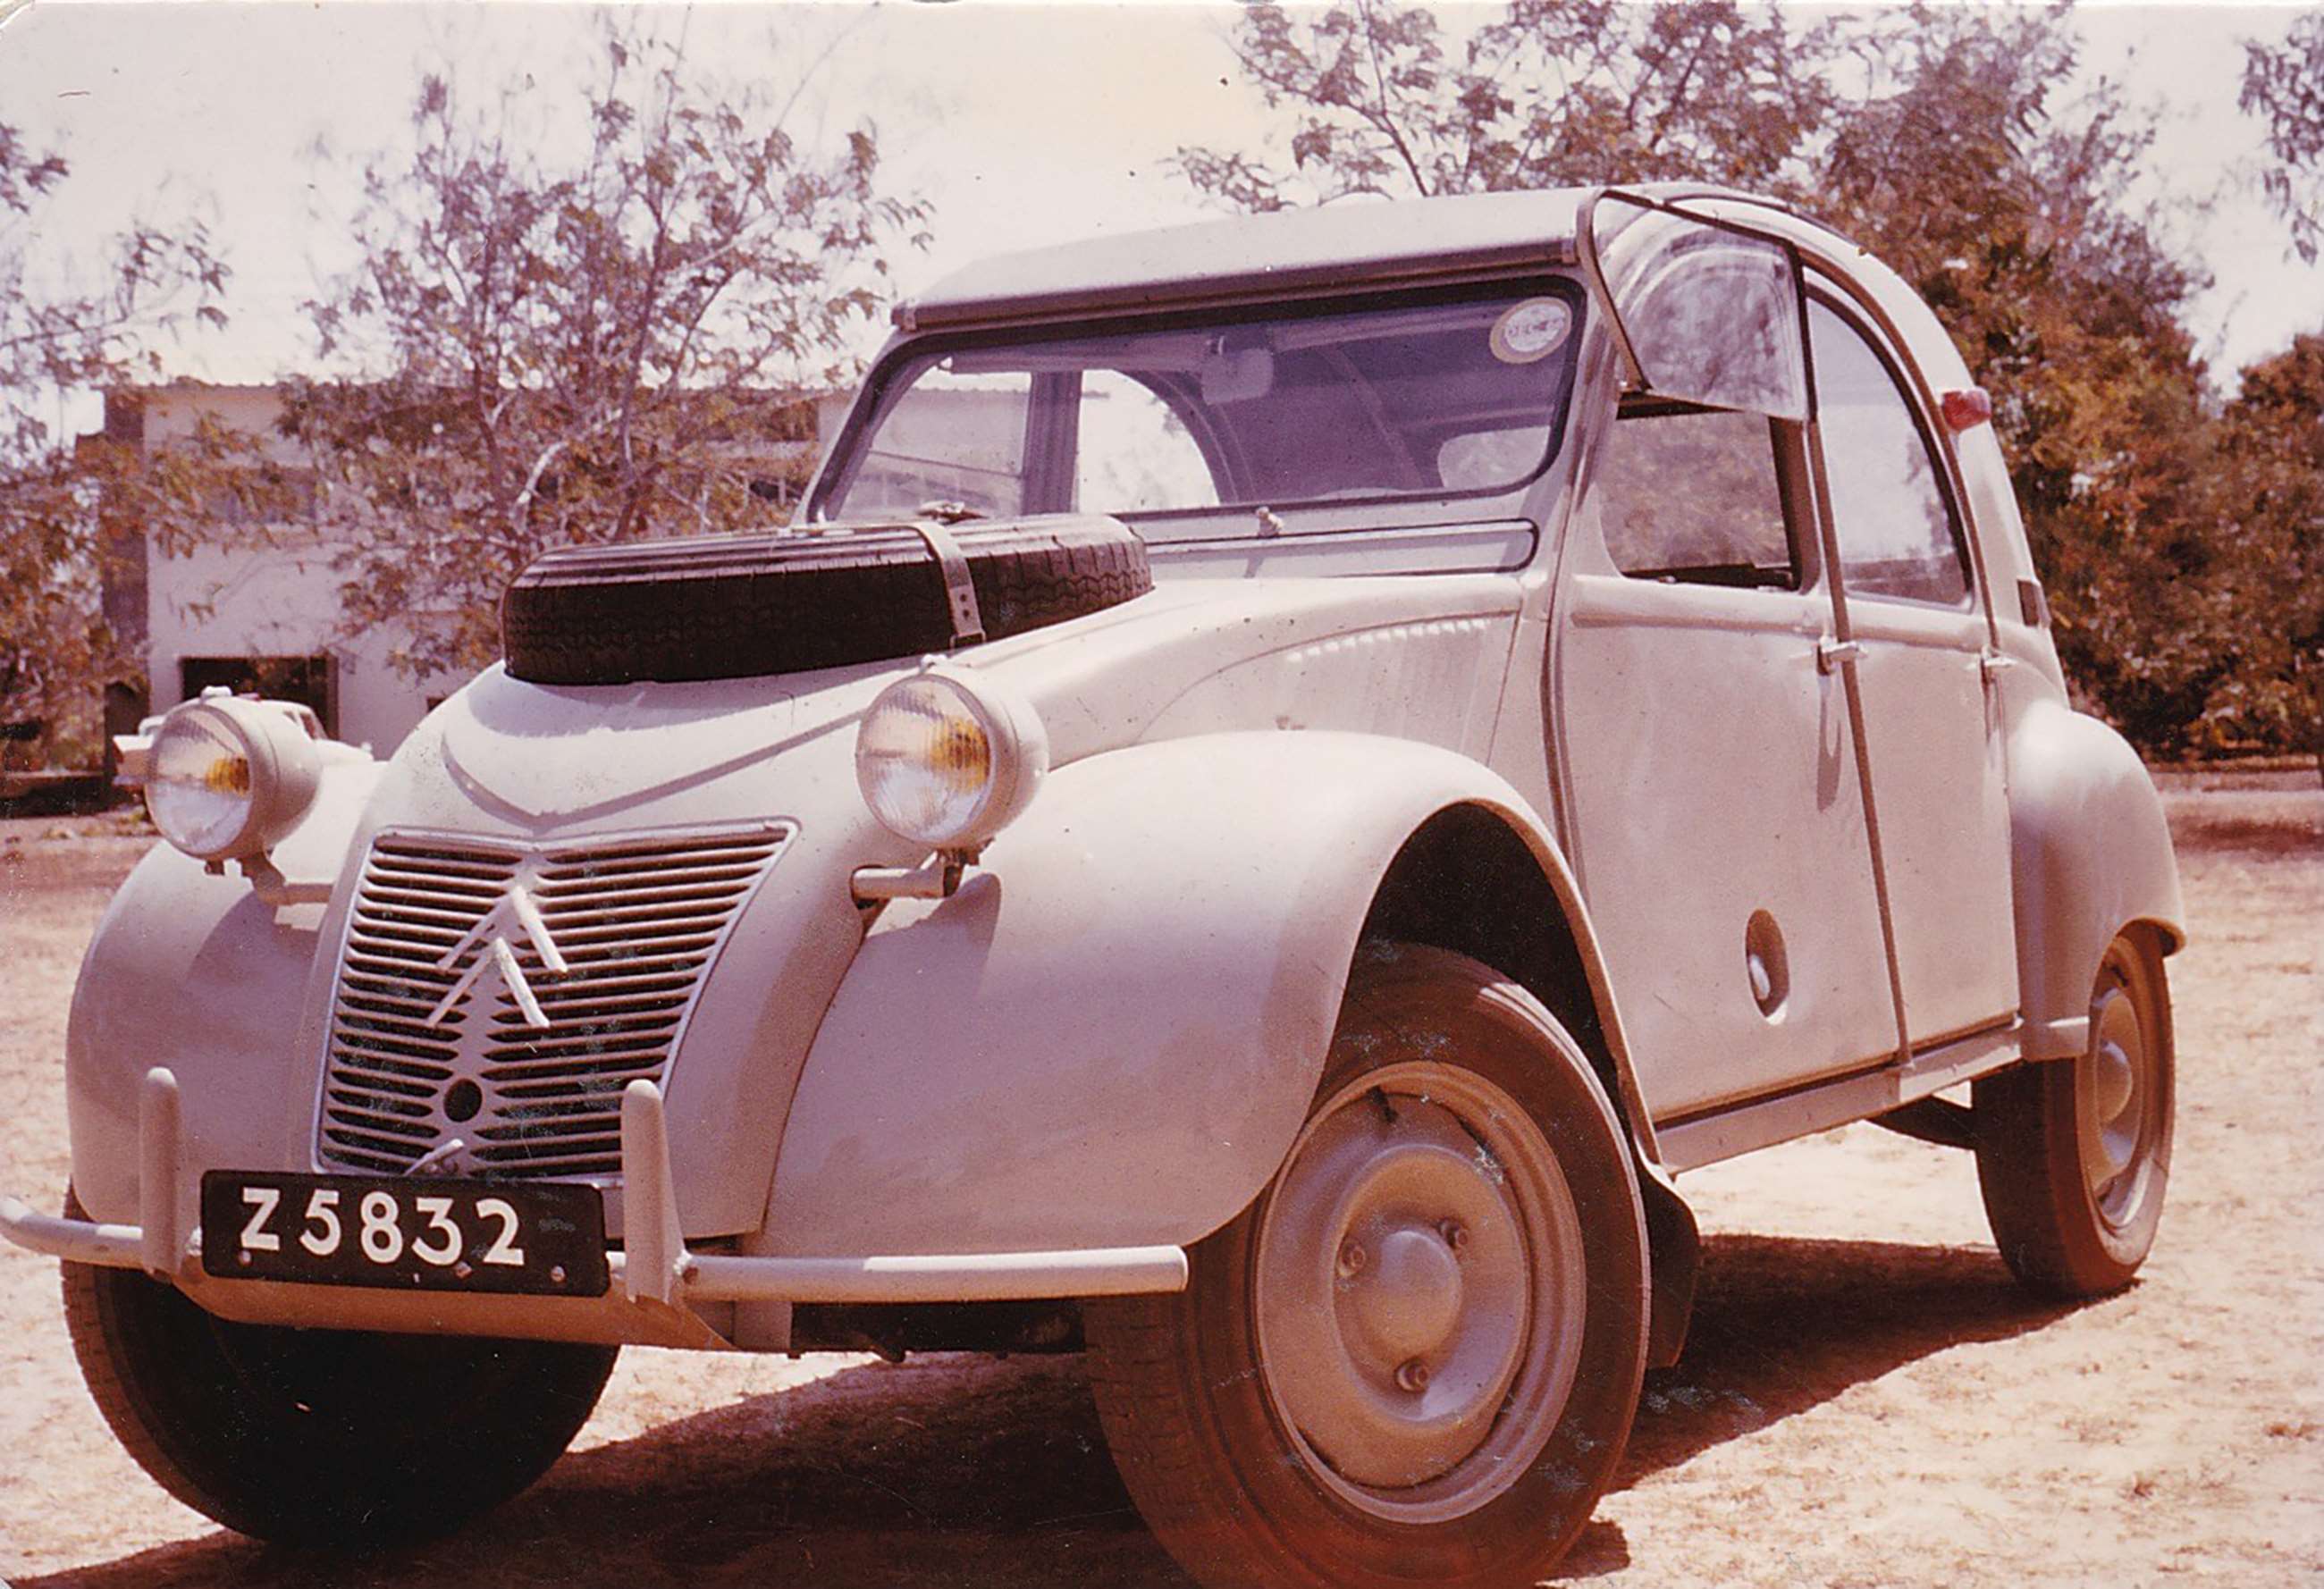 Axon's Automotive Anorak: 100 years of Citroën innovation